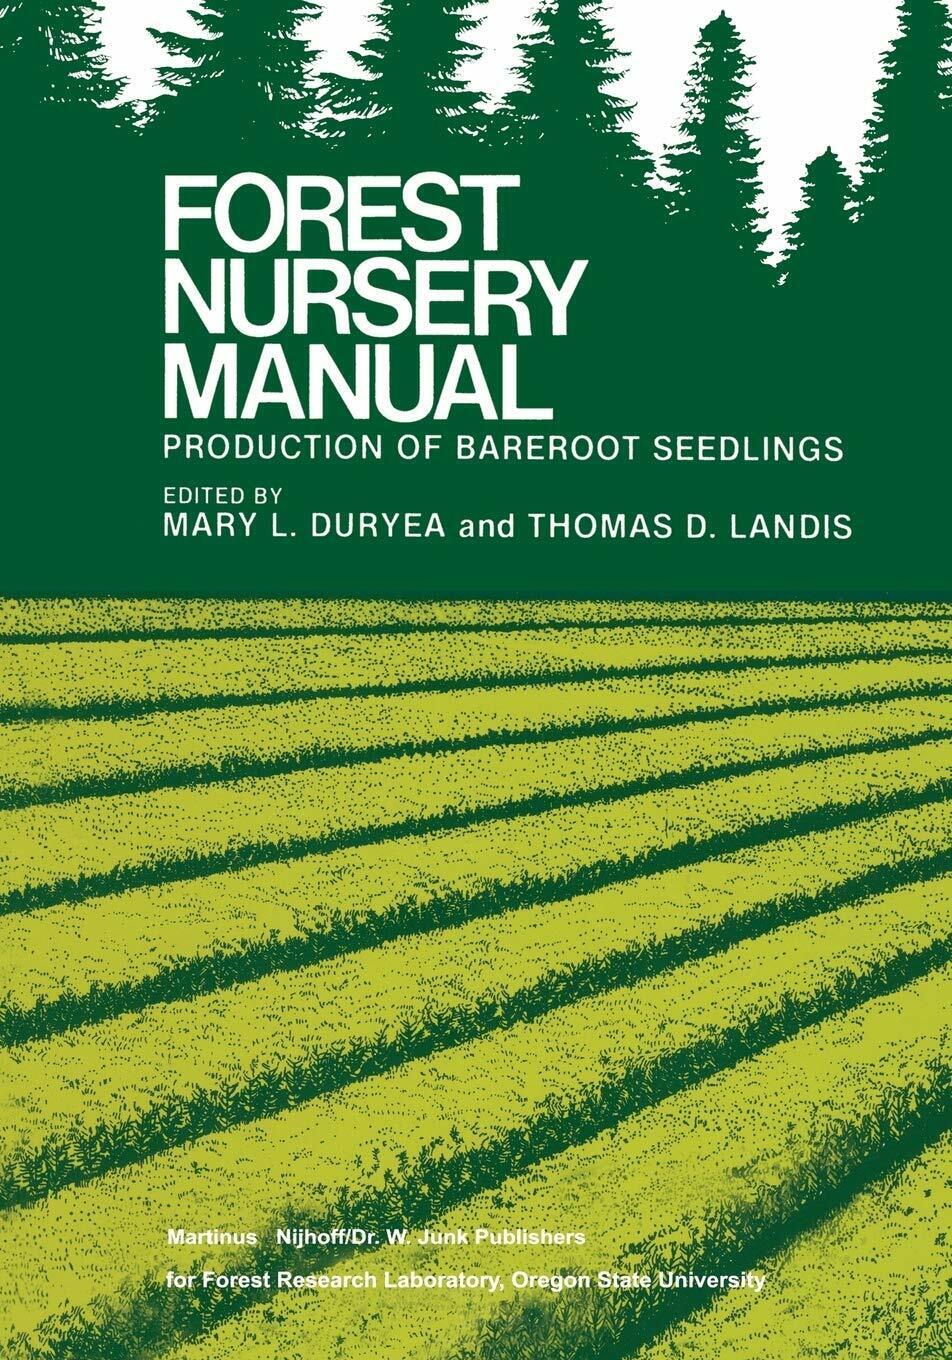 Forest Nursery Manual: Production of Bareroot Seedlings - Springer, 2011